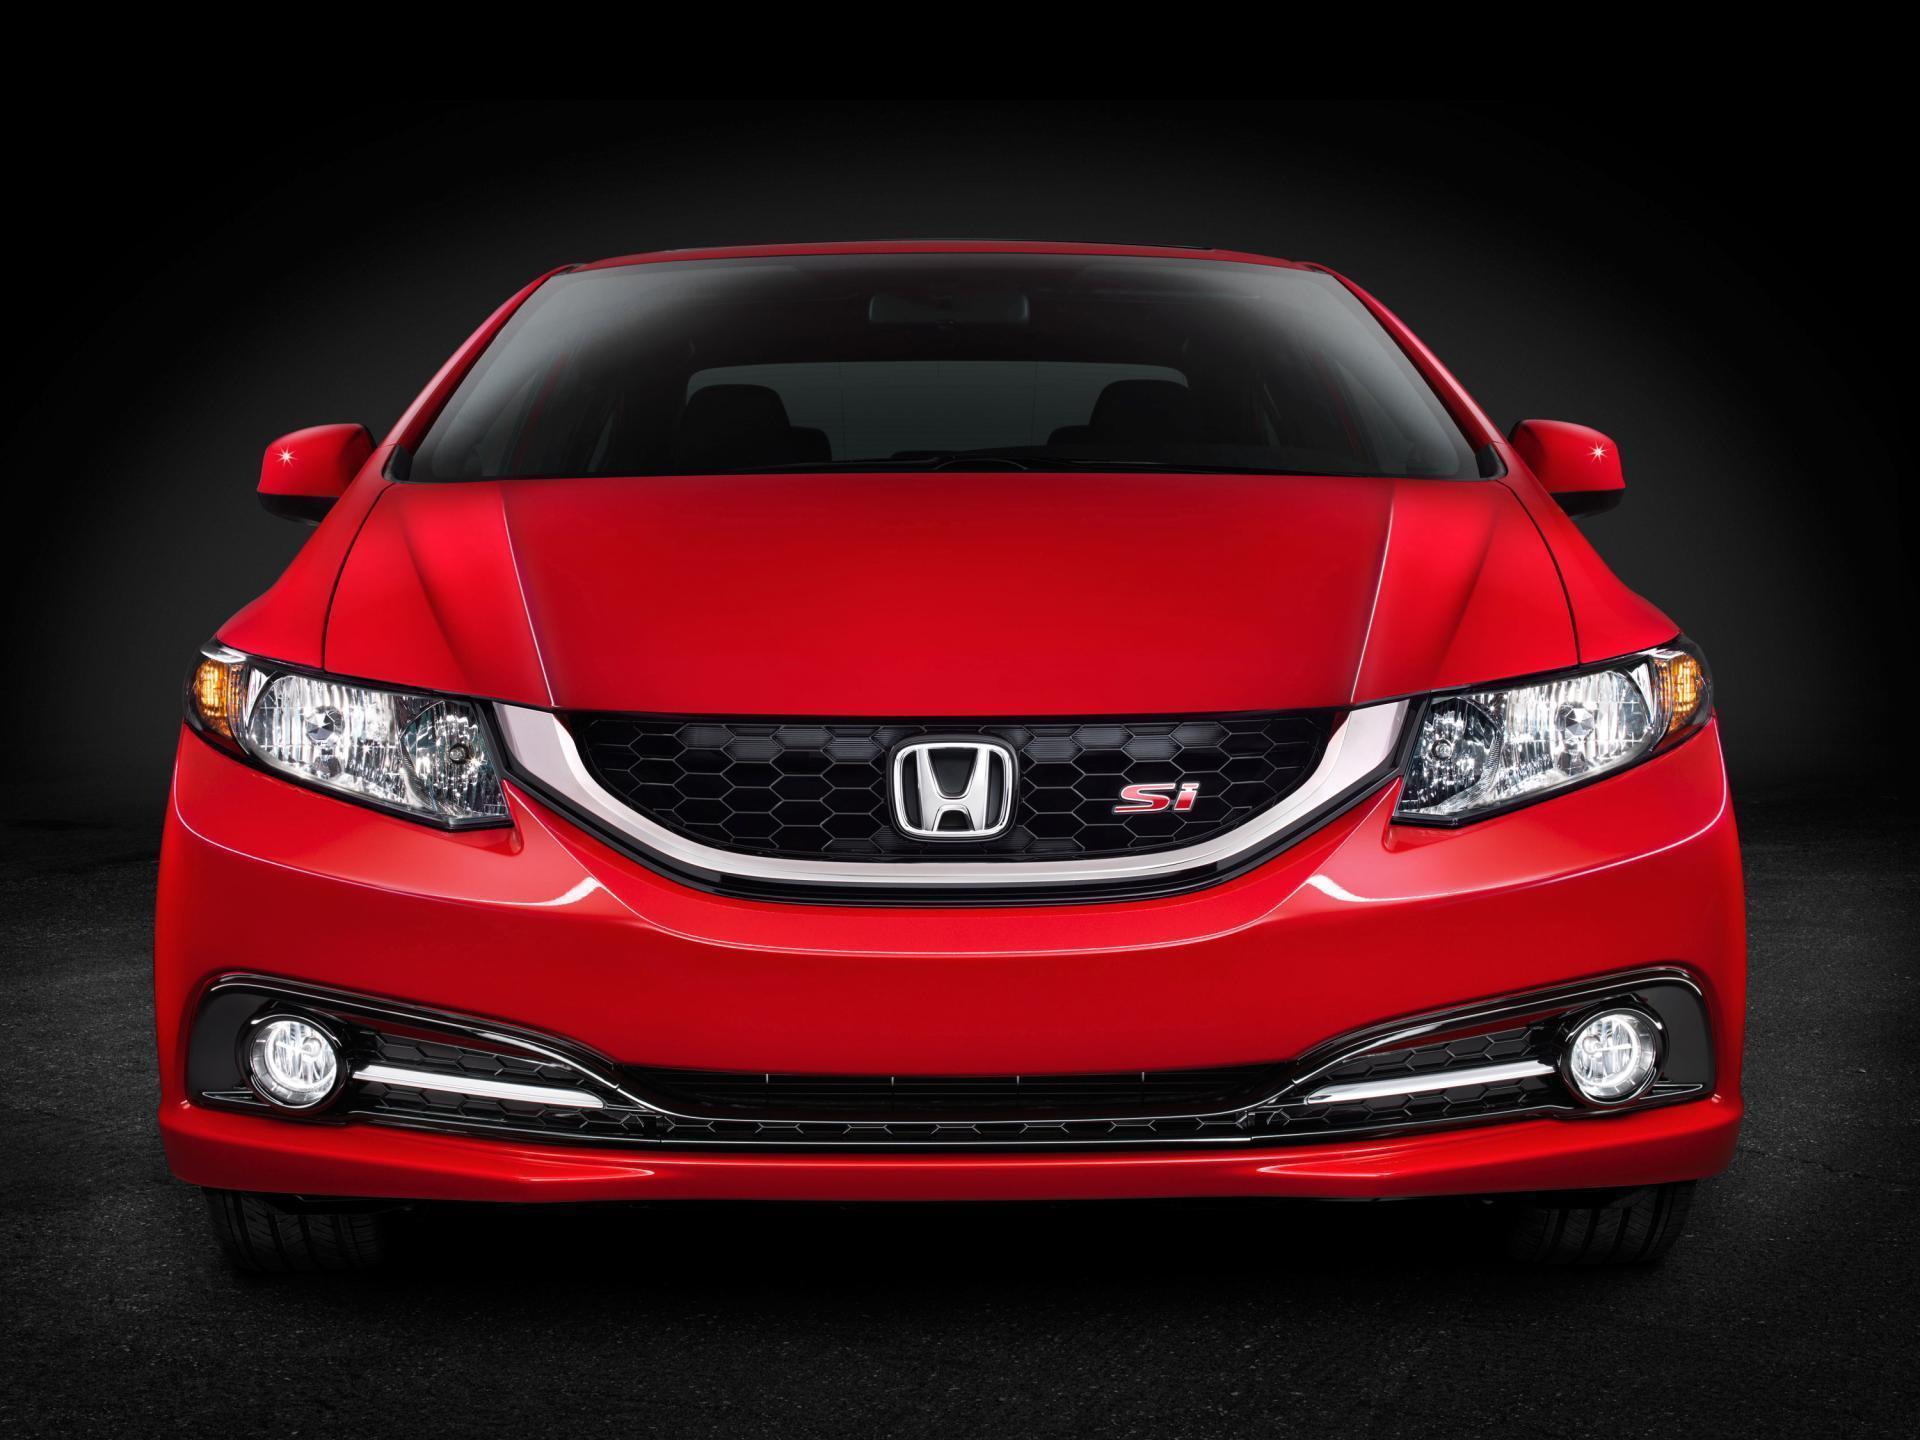 Honda Civic Si 2013 Wallpaper HD. Hdwidescreens